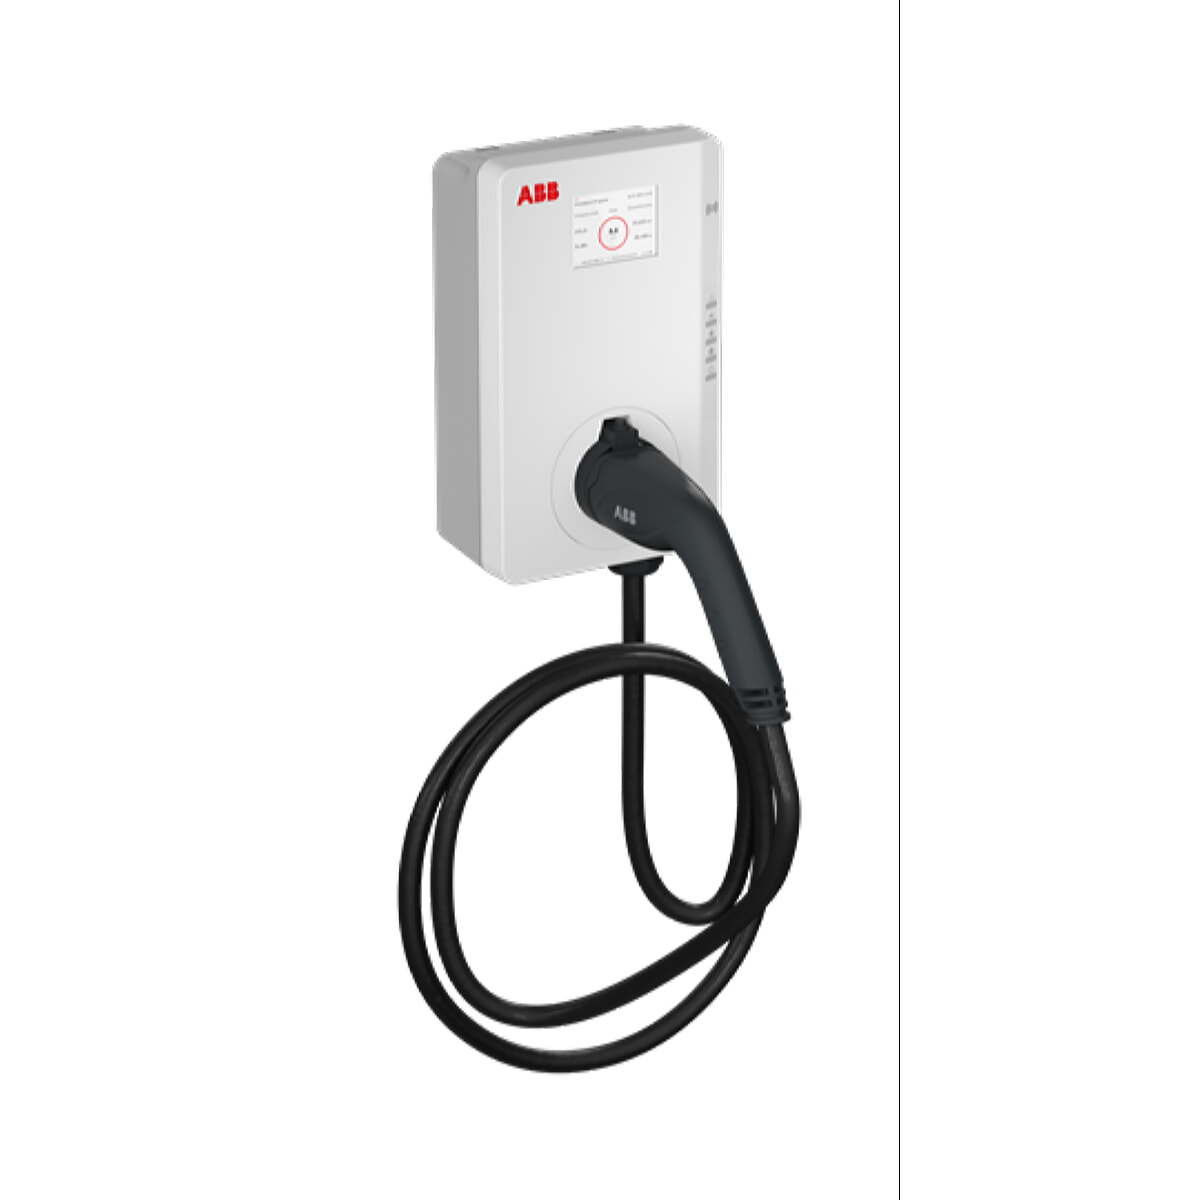 ABB Stotz-Kontakt wall charging station Terra AC W22-G5-RD-PC-0 with RFID display